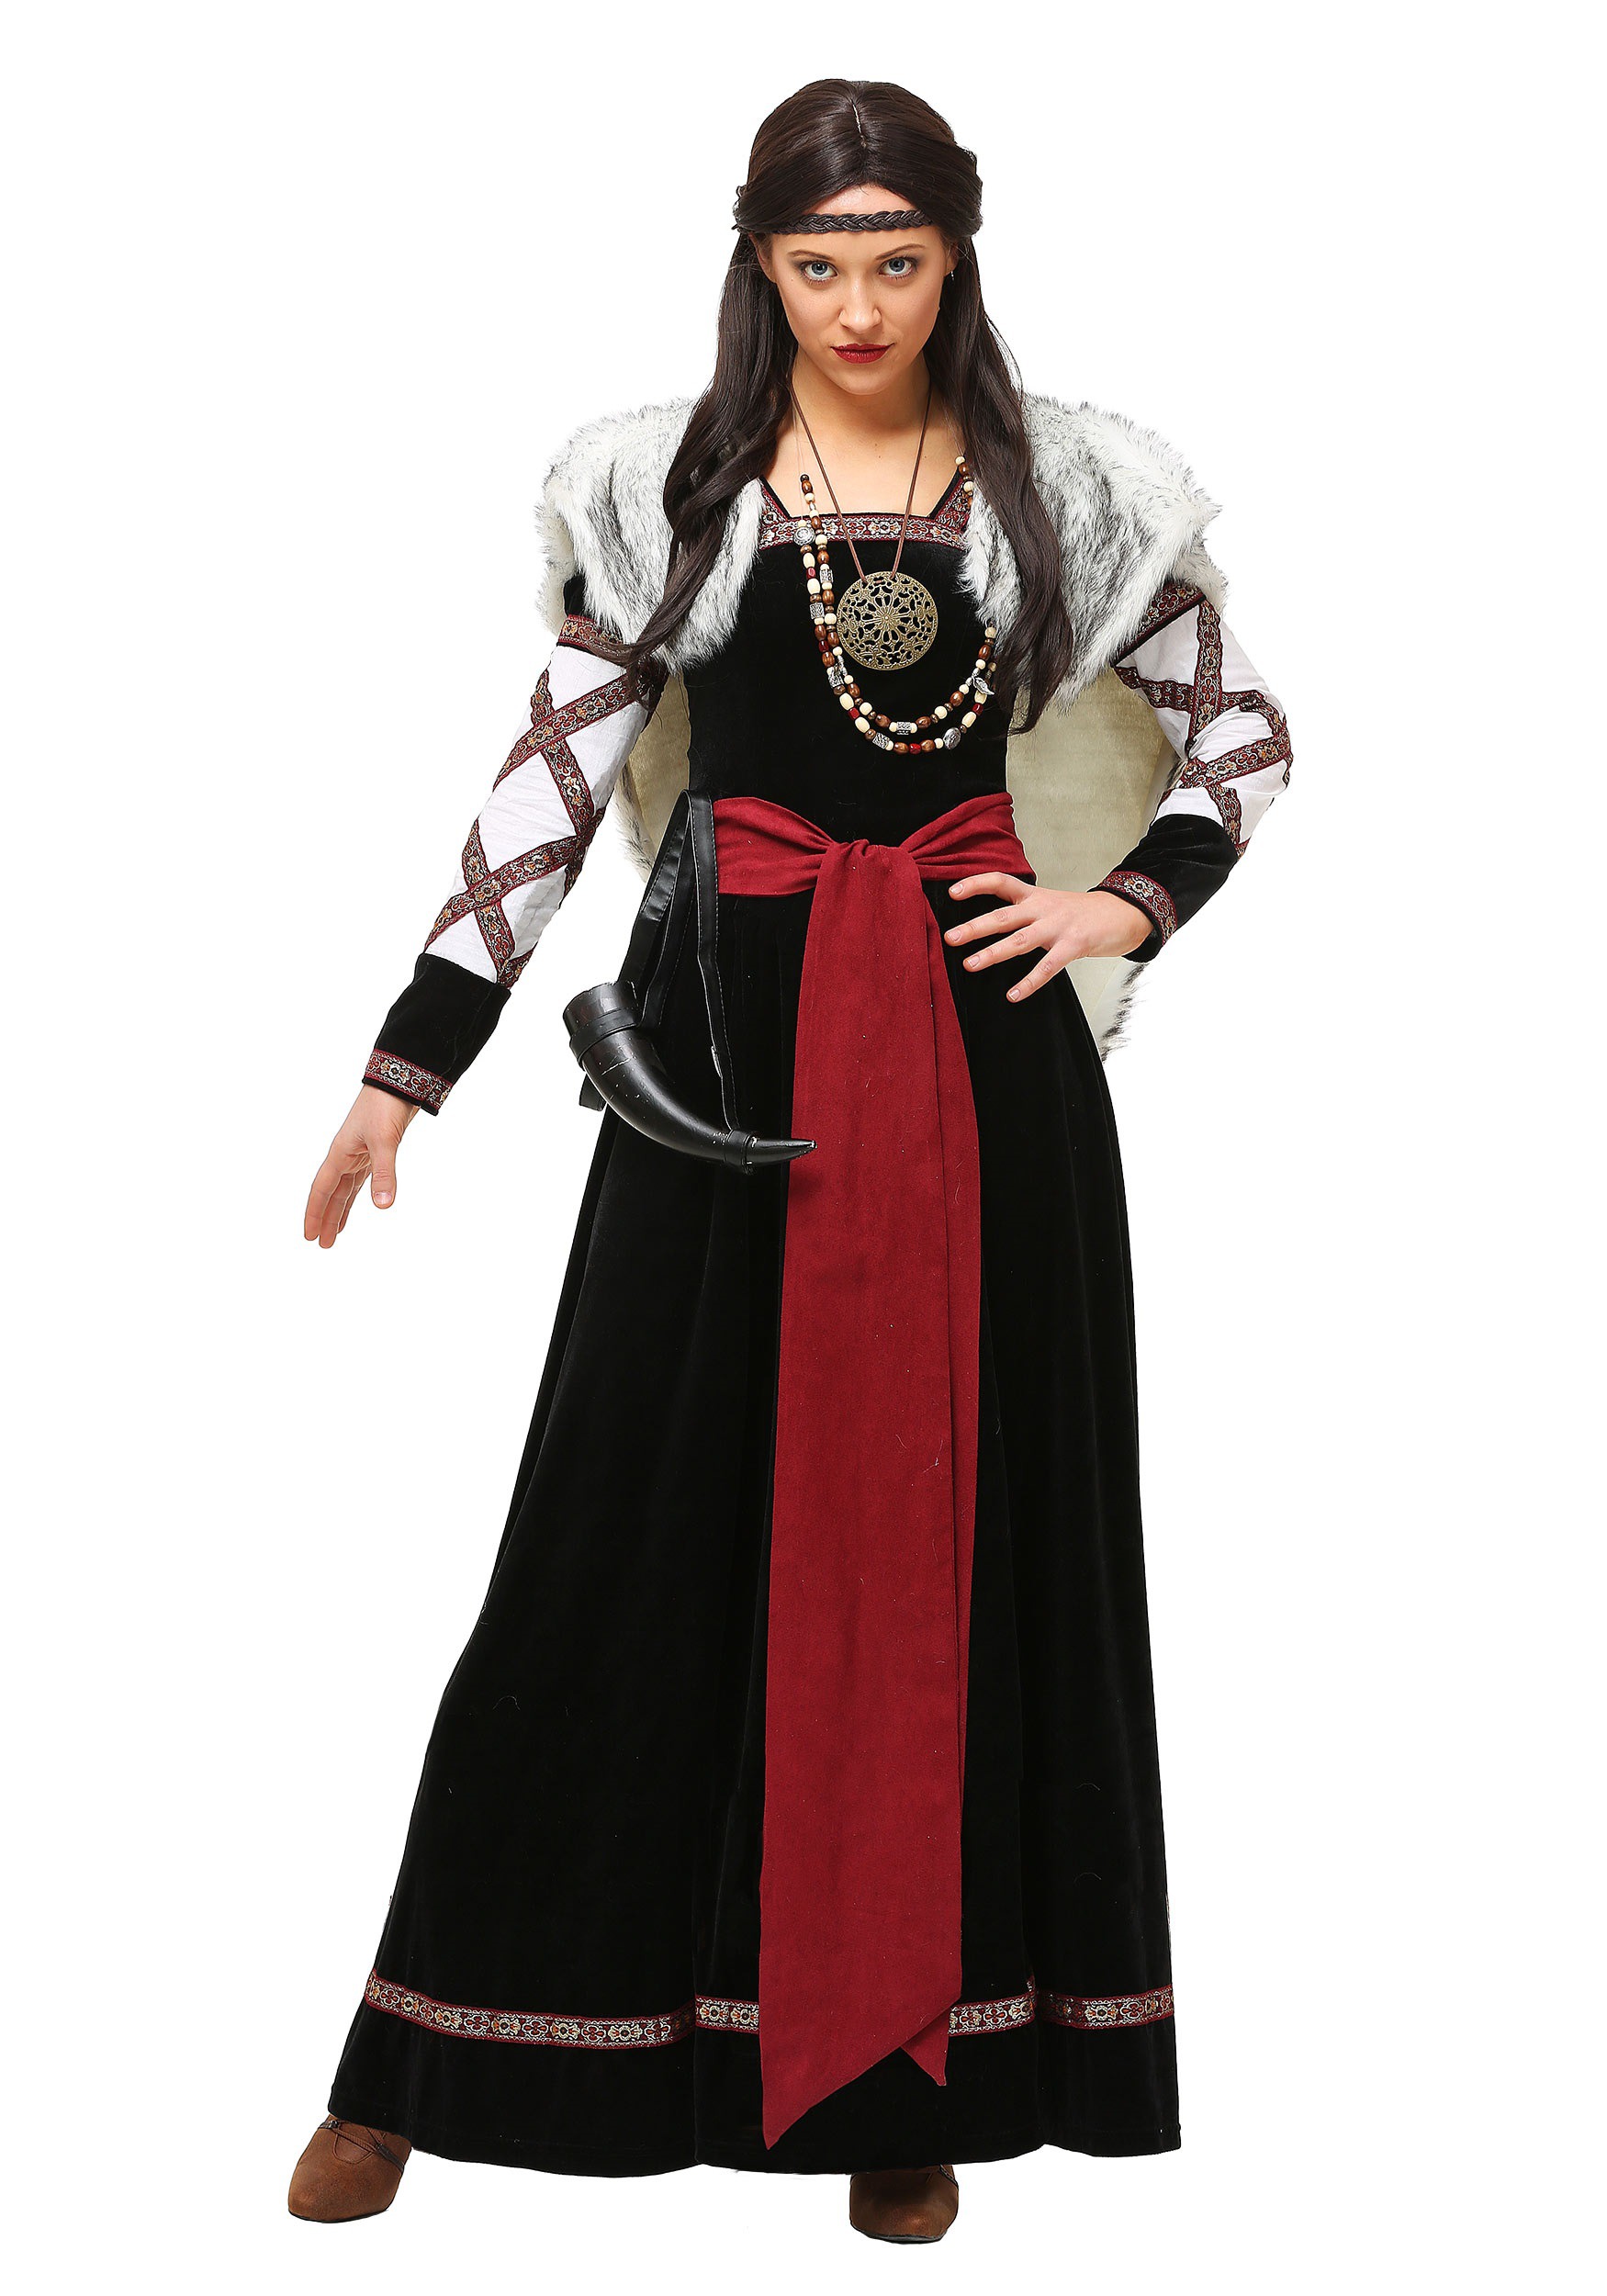 https://images.fun.com/products/37999/1-1/plus-size-dark-viking-dress.jpg